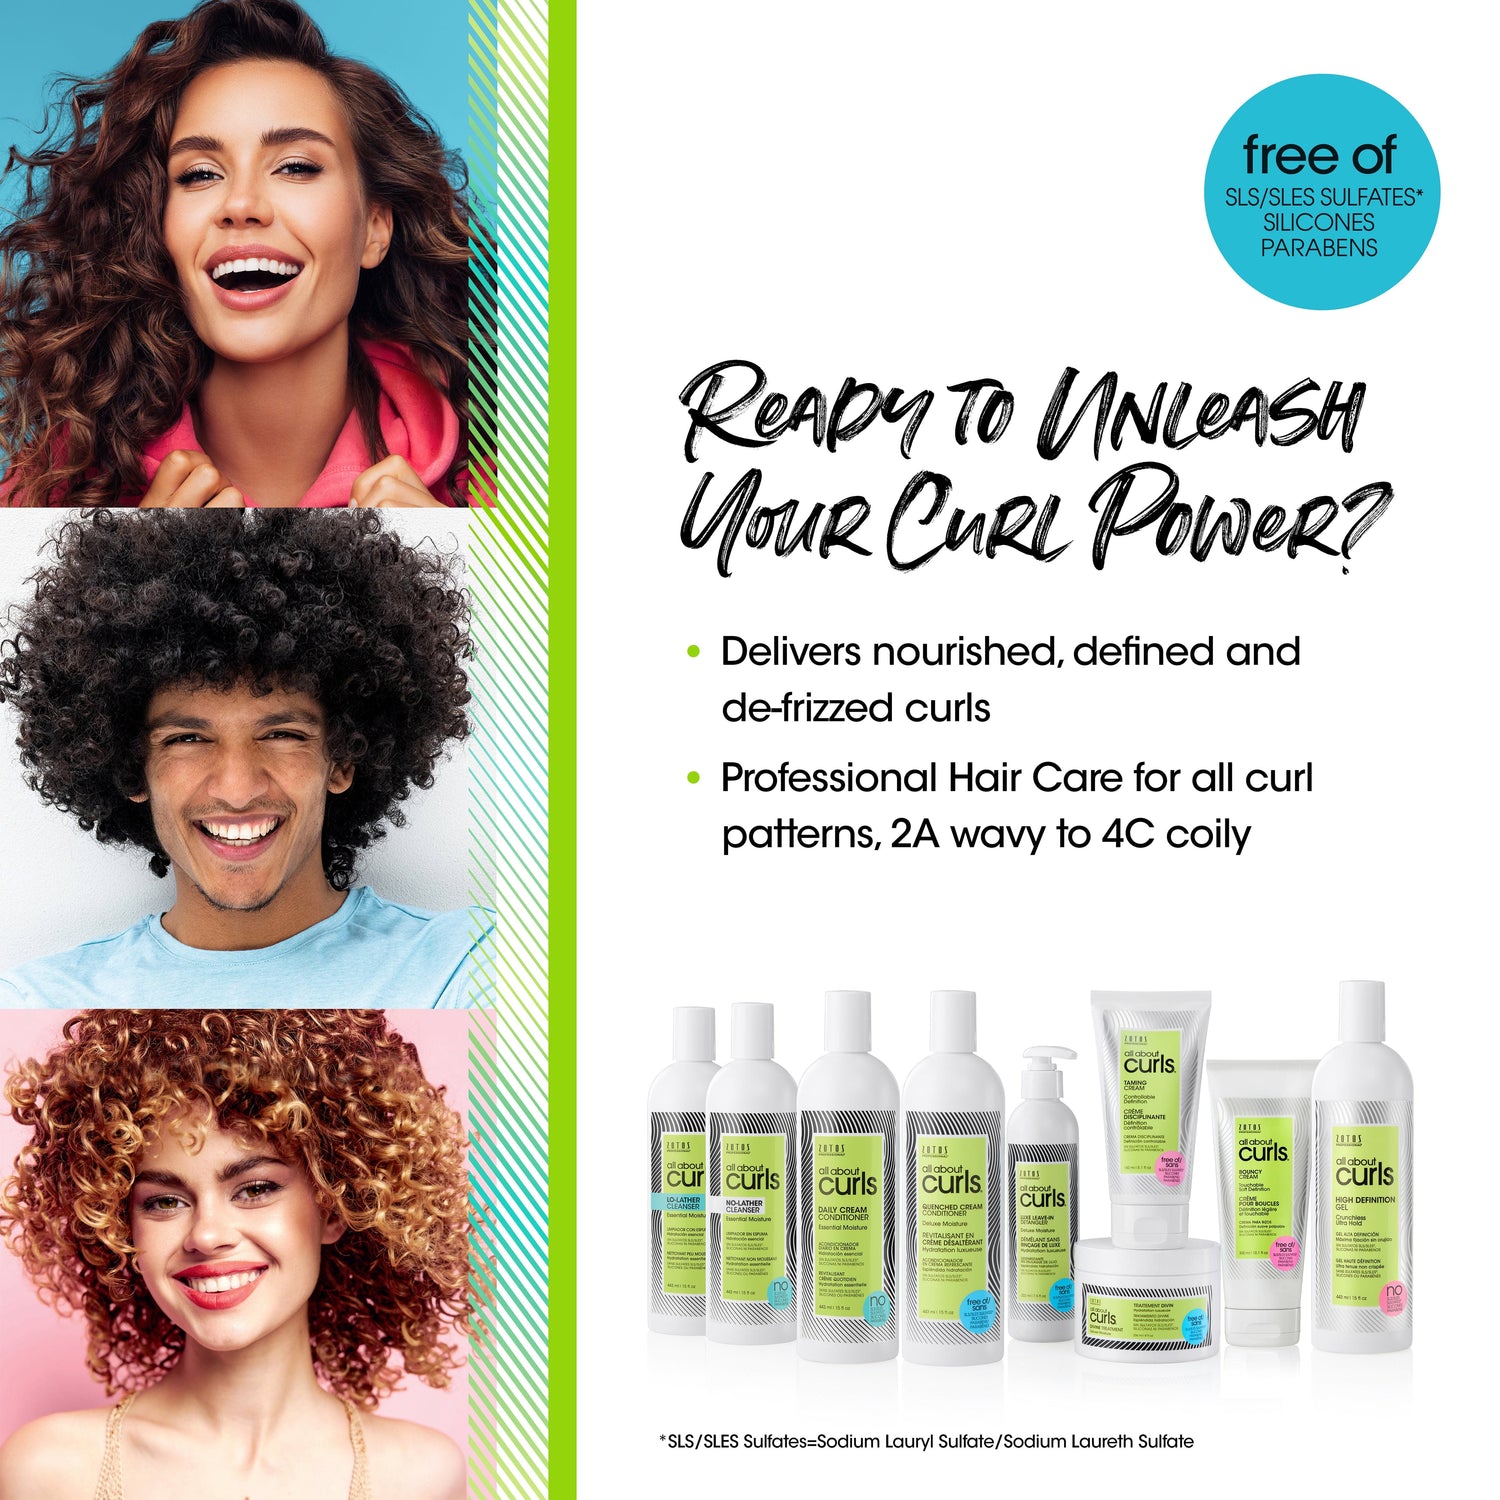 All About Curls® Bye, Buildup! Pre-Shampoo Treatment